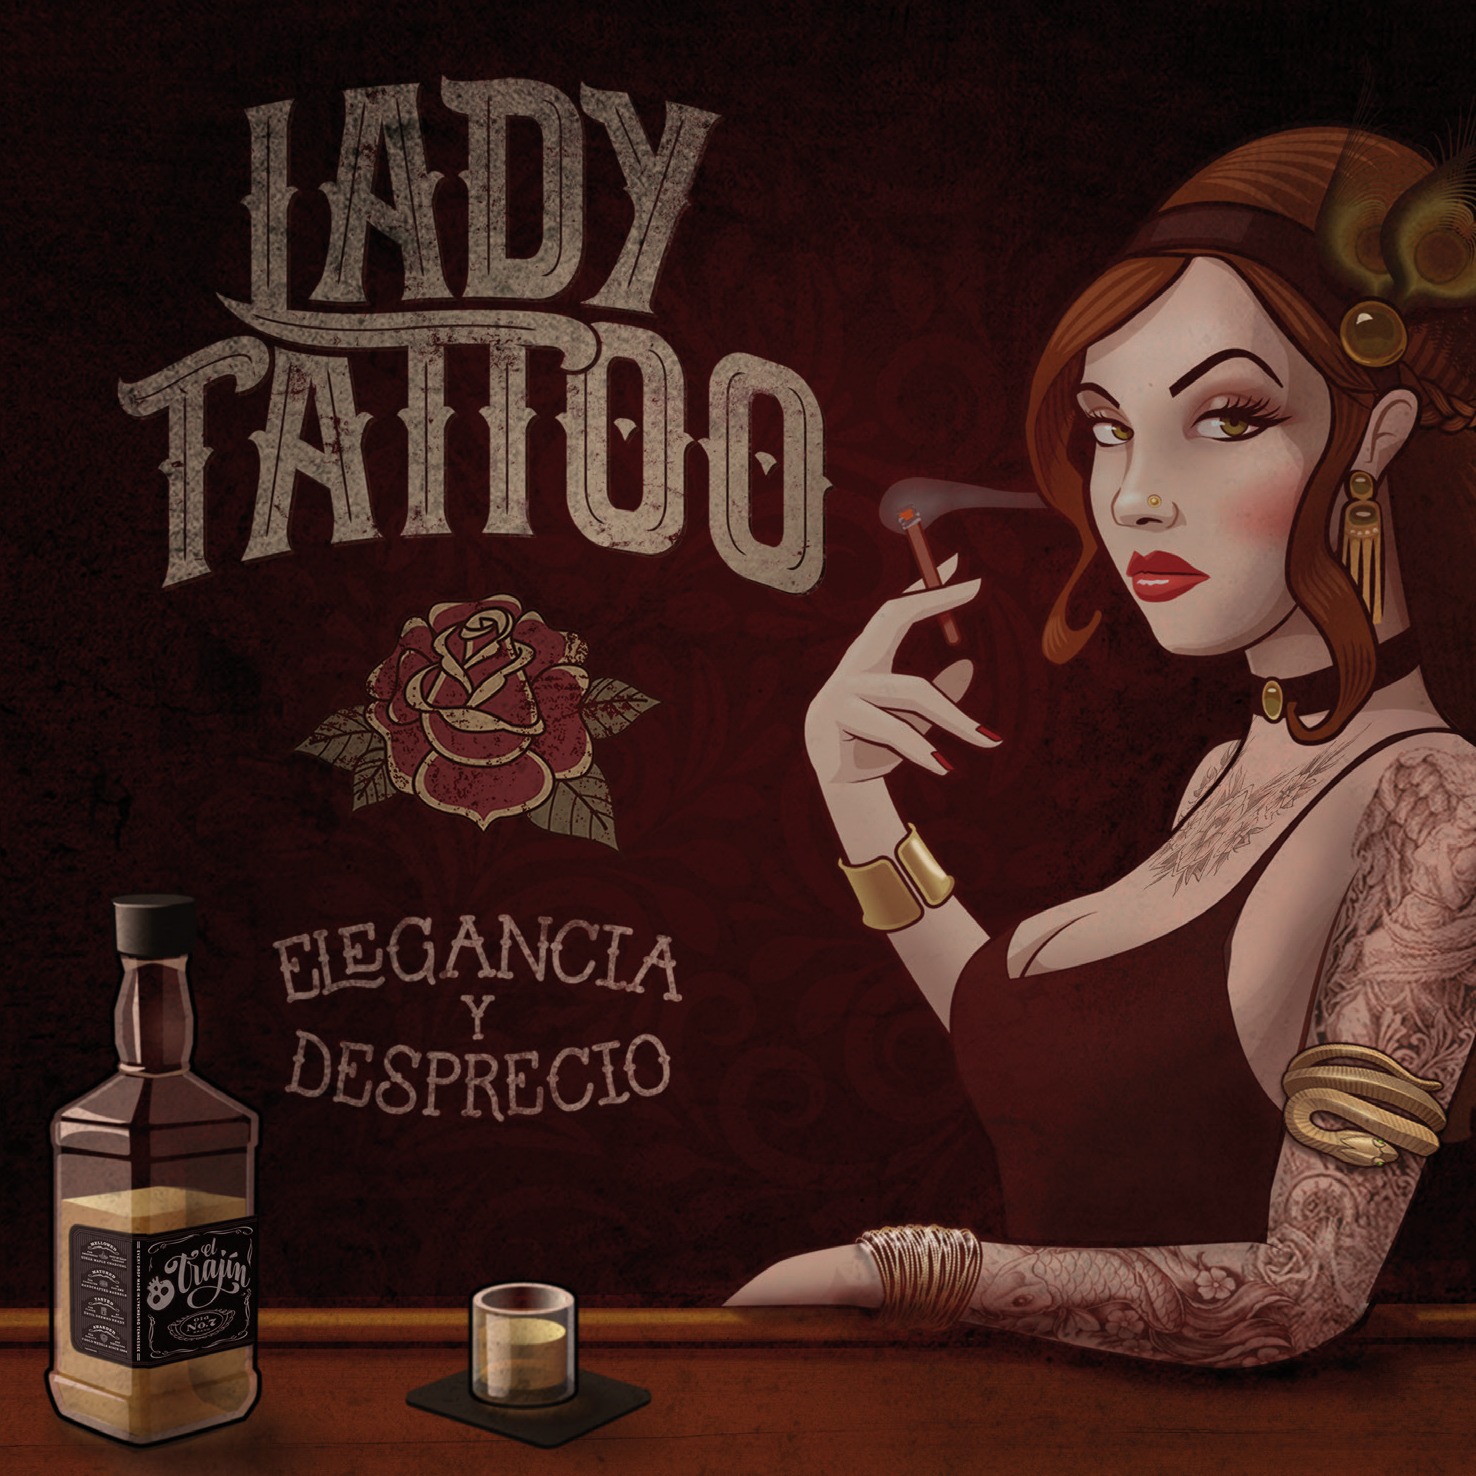 Lady Tattoo en La Alquitara